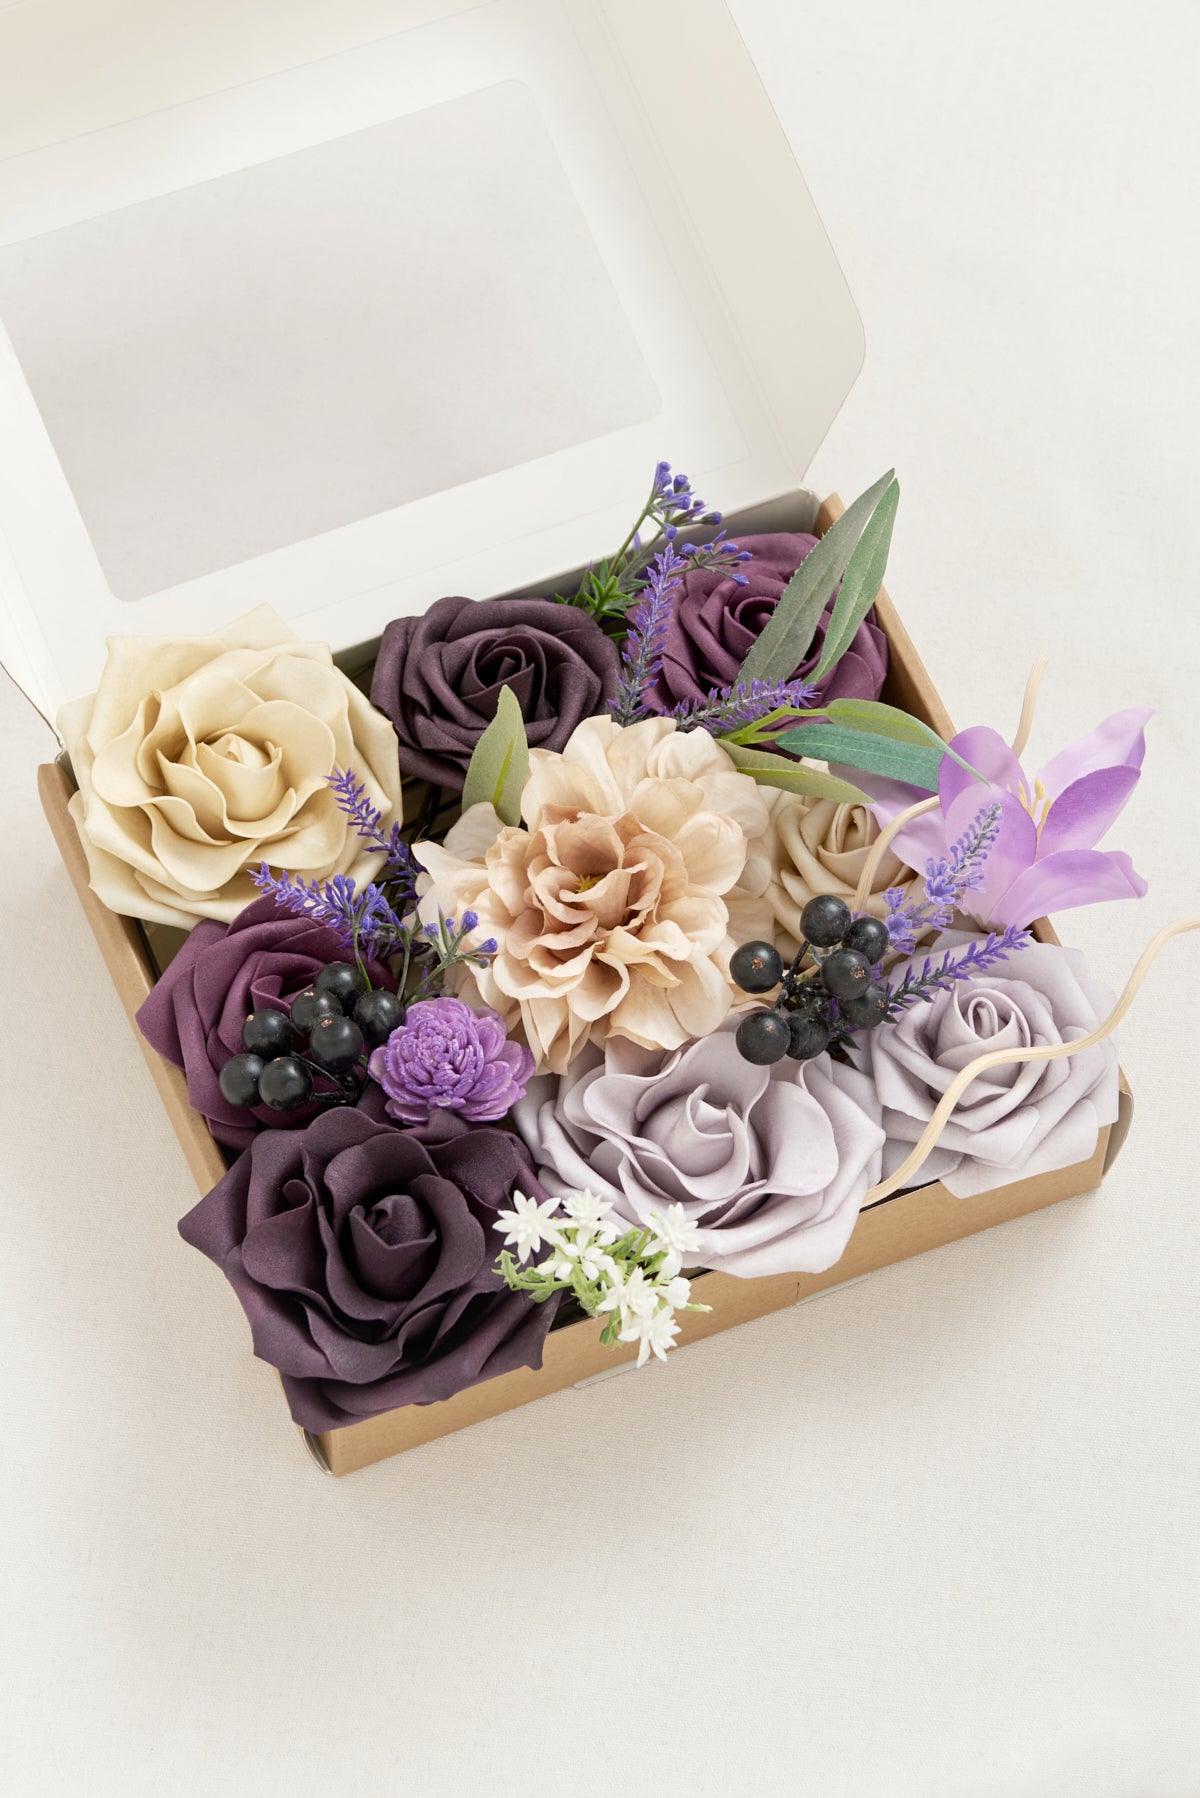 Sample Box in French Lavender & Plum